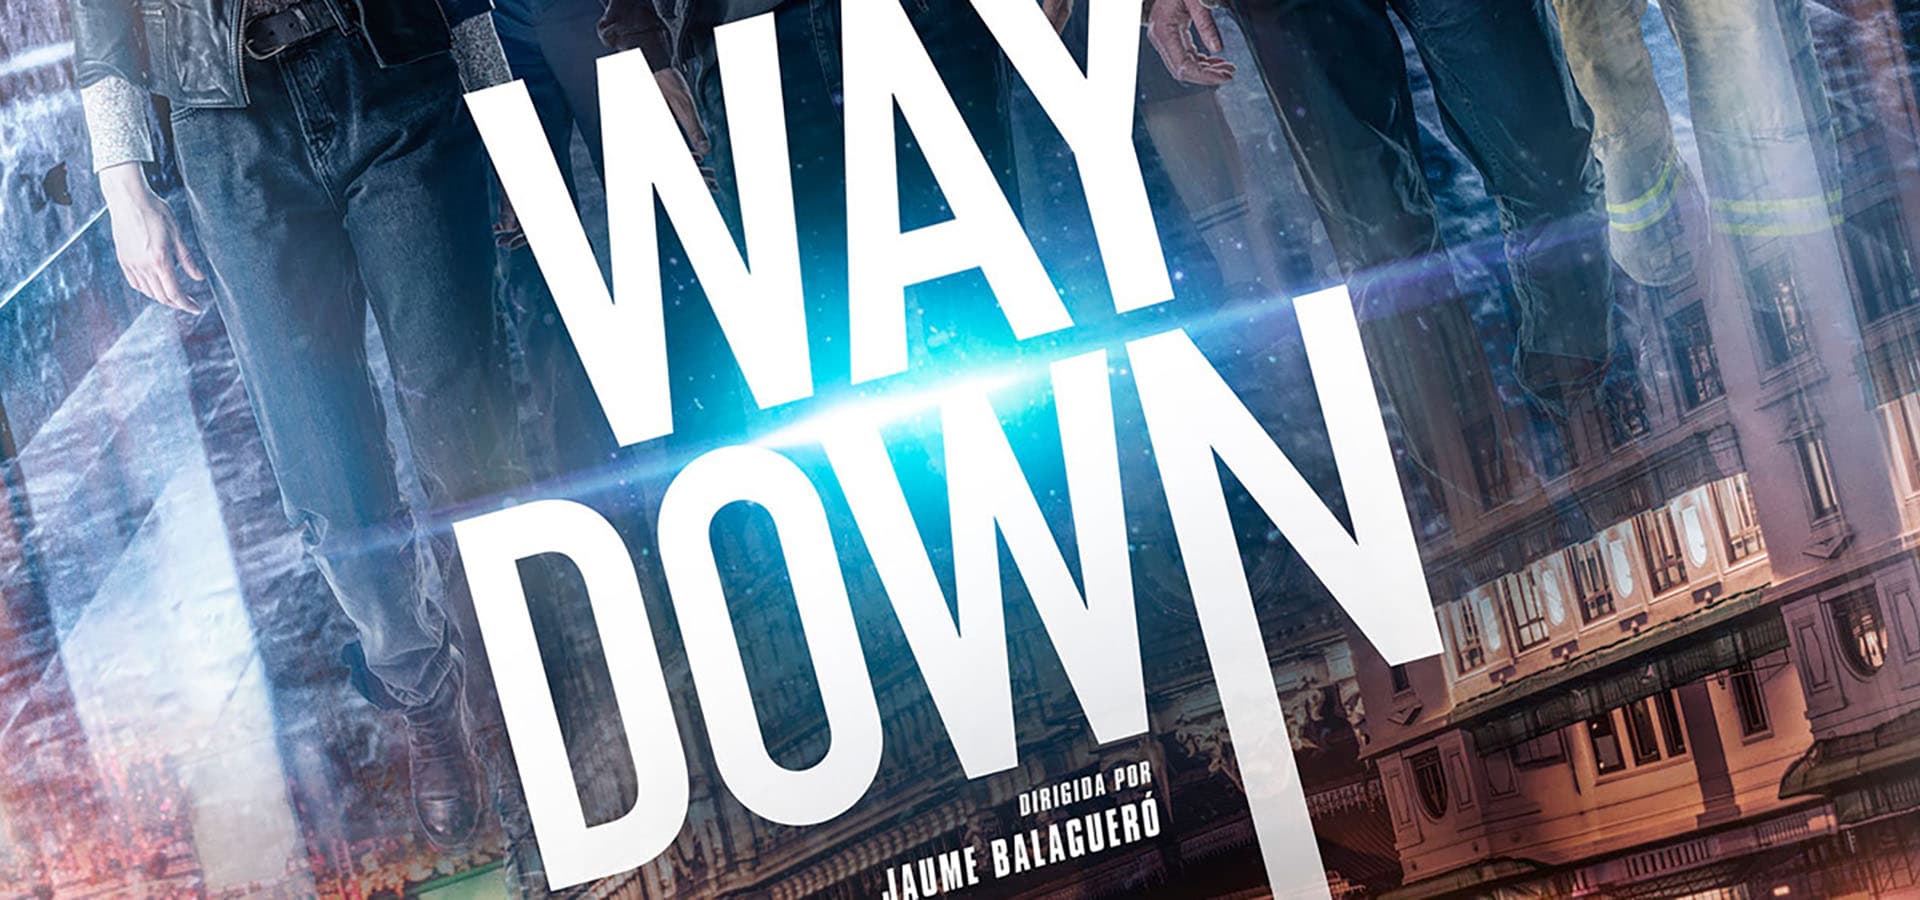 cartel de 'Way Down'